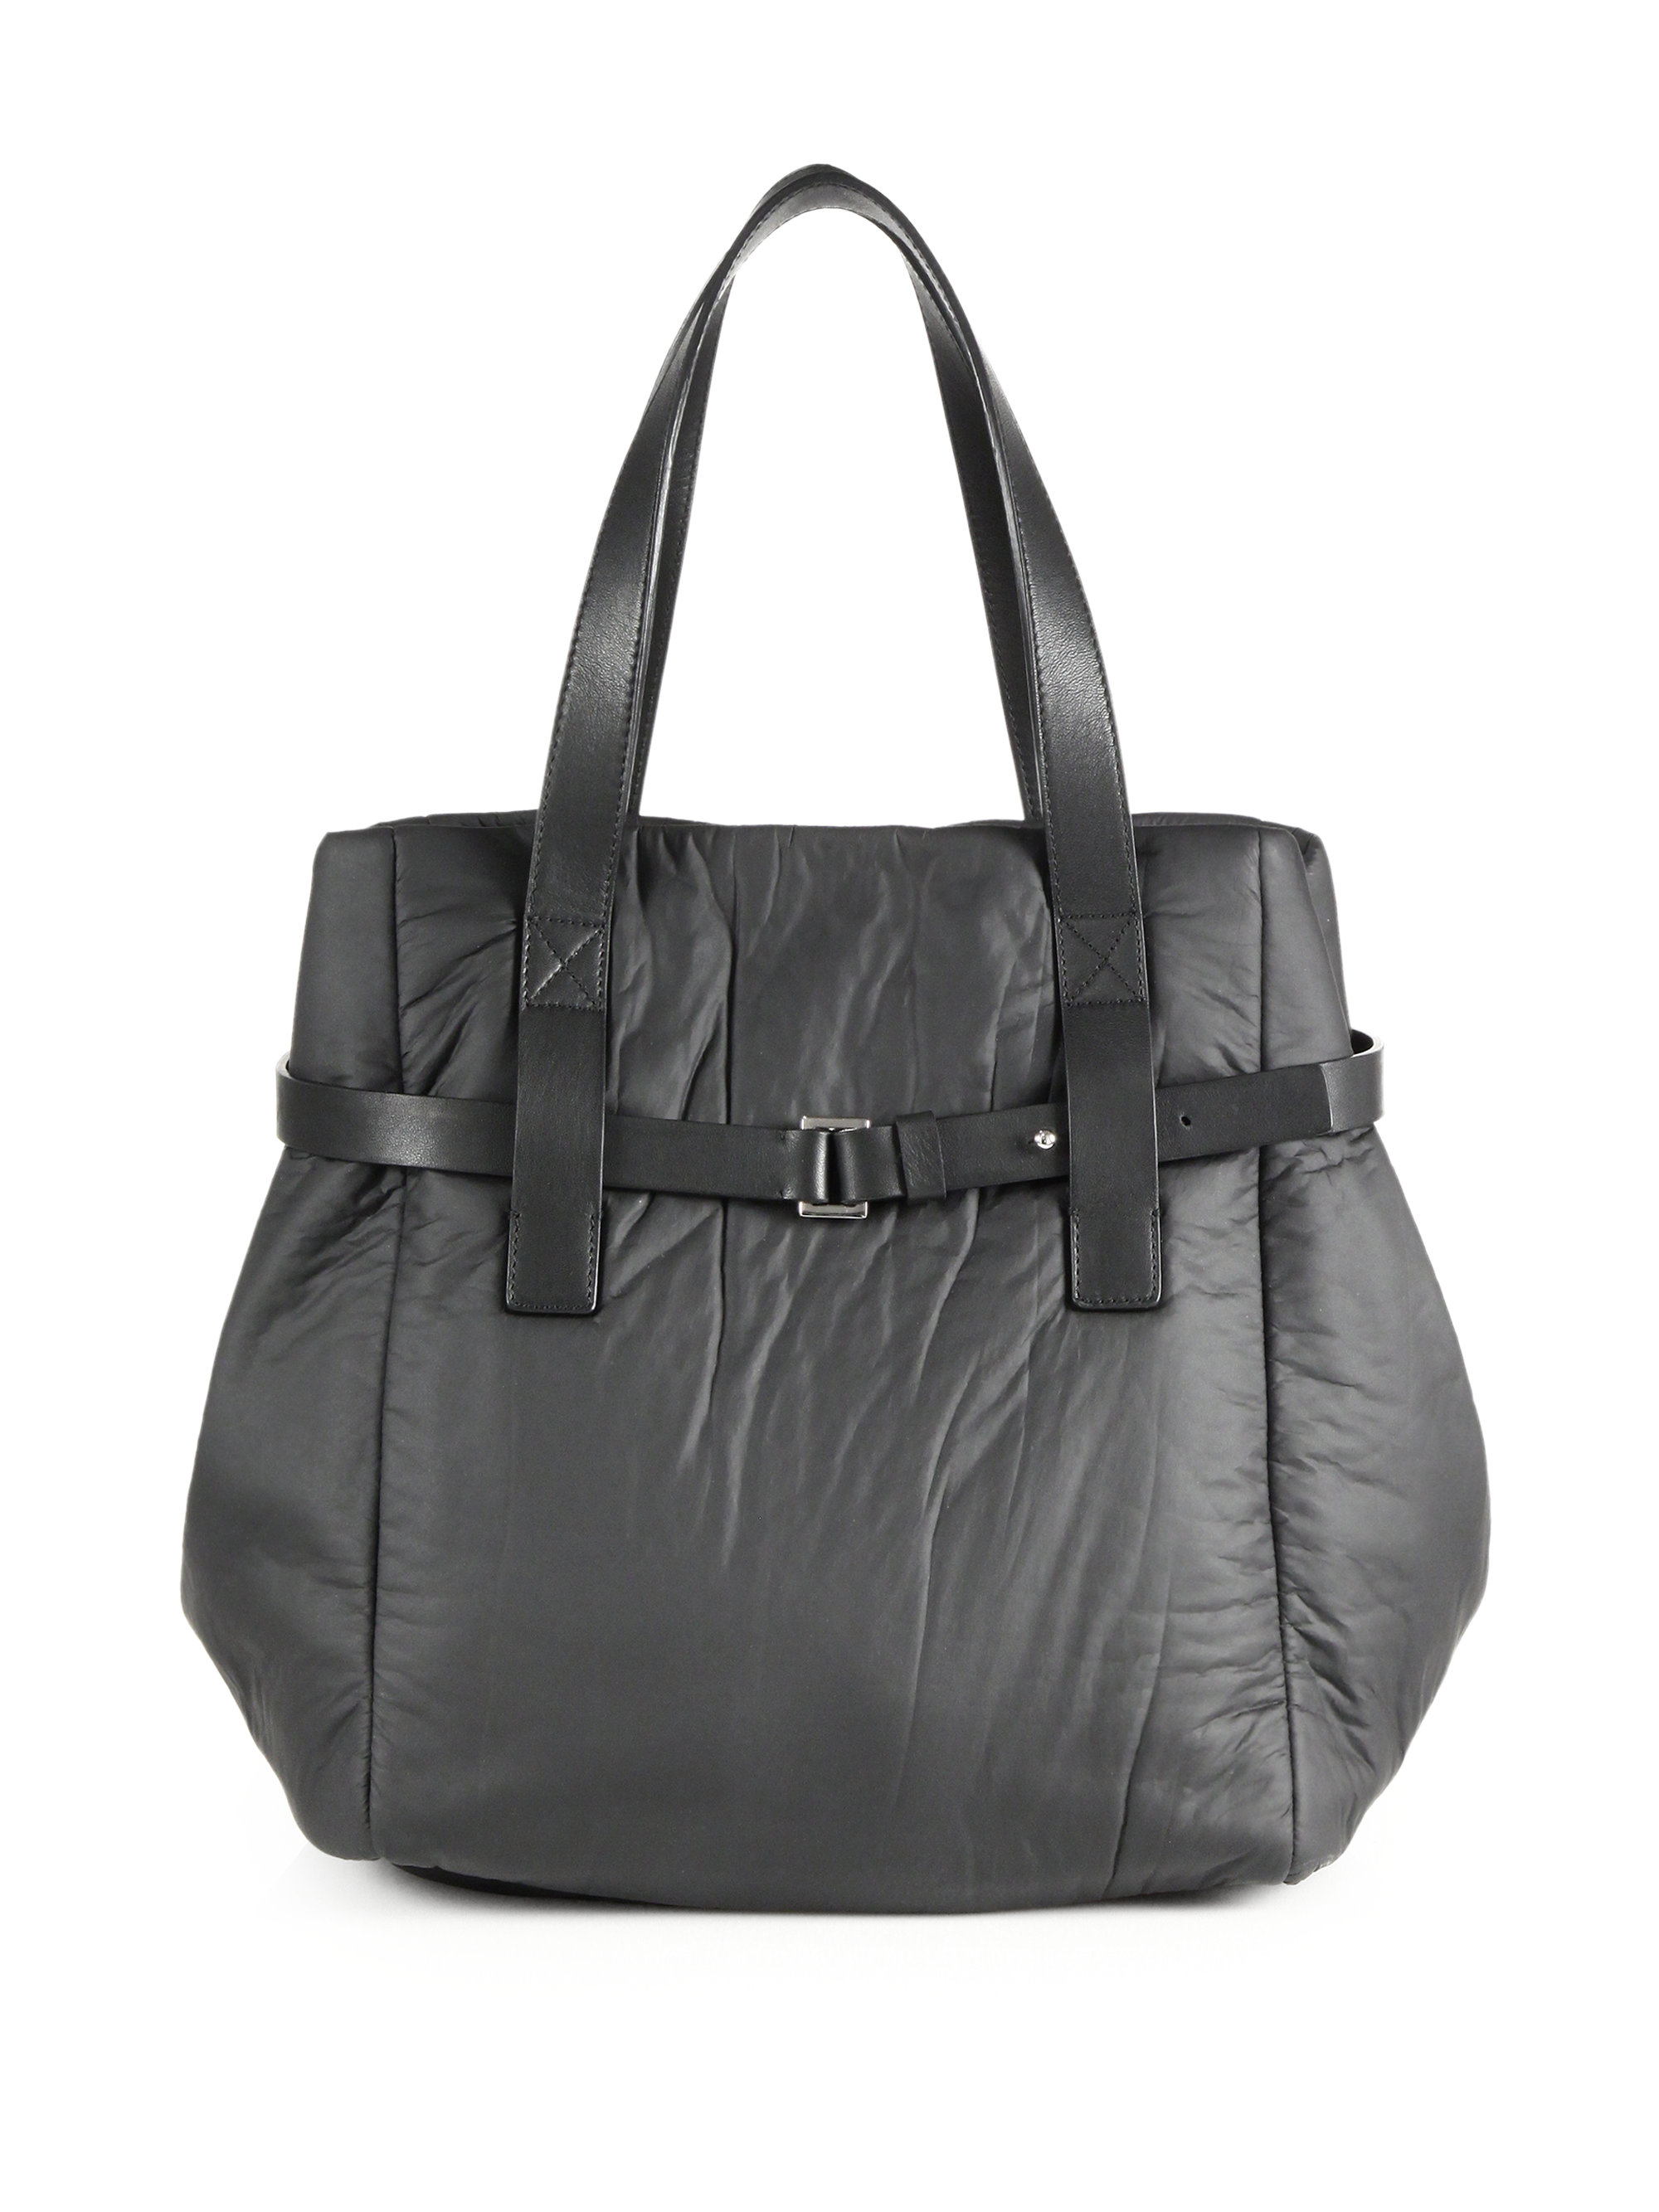 Lyst - Marni Nylon Leather Bucket Bag in Gray